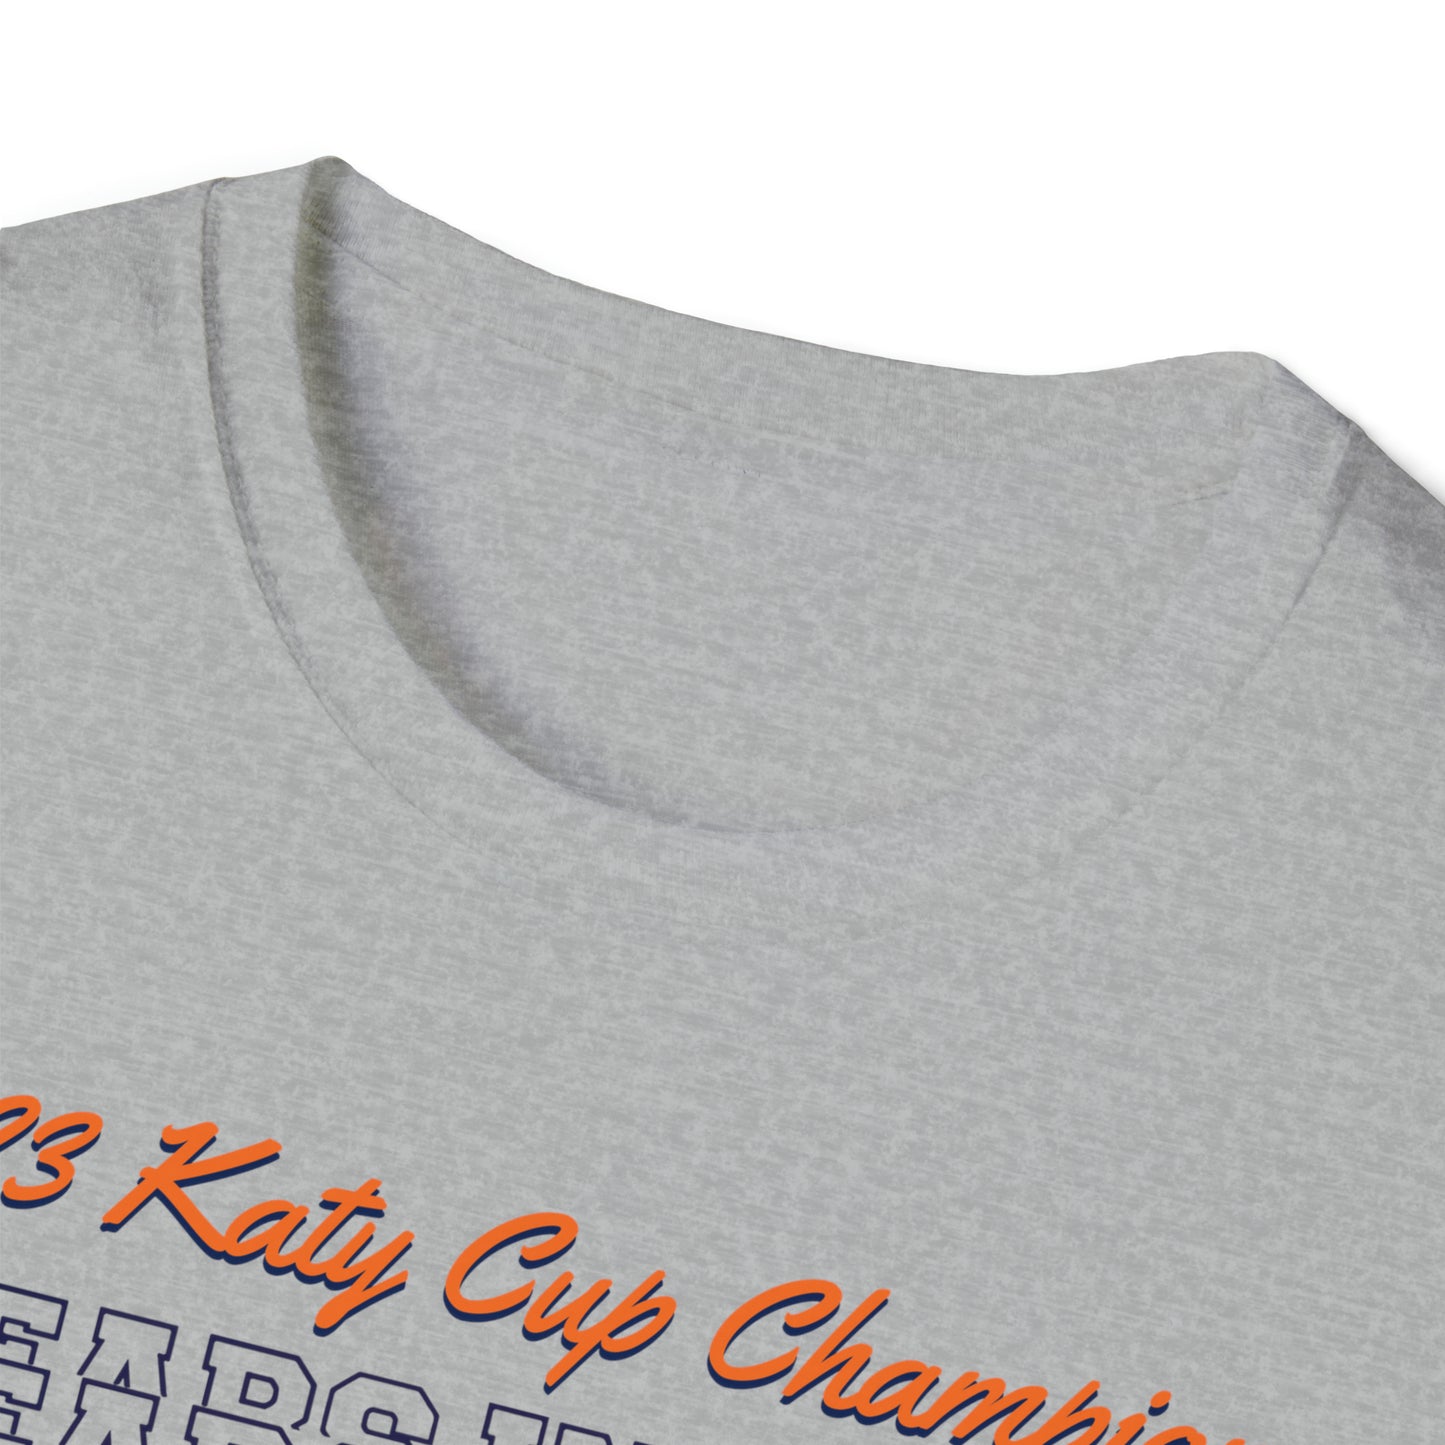 2023 Katy Cup Champions T-Shirt